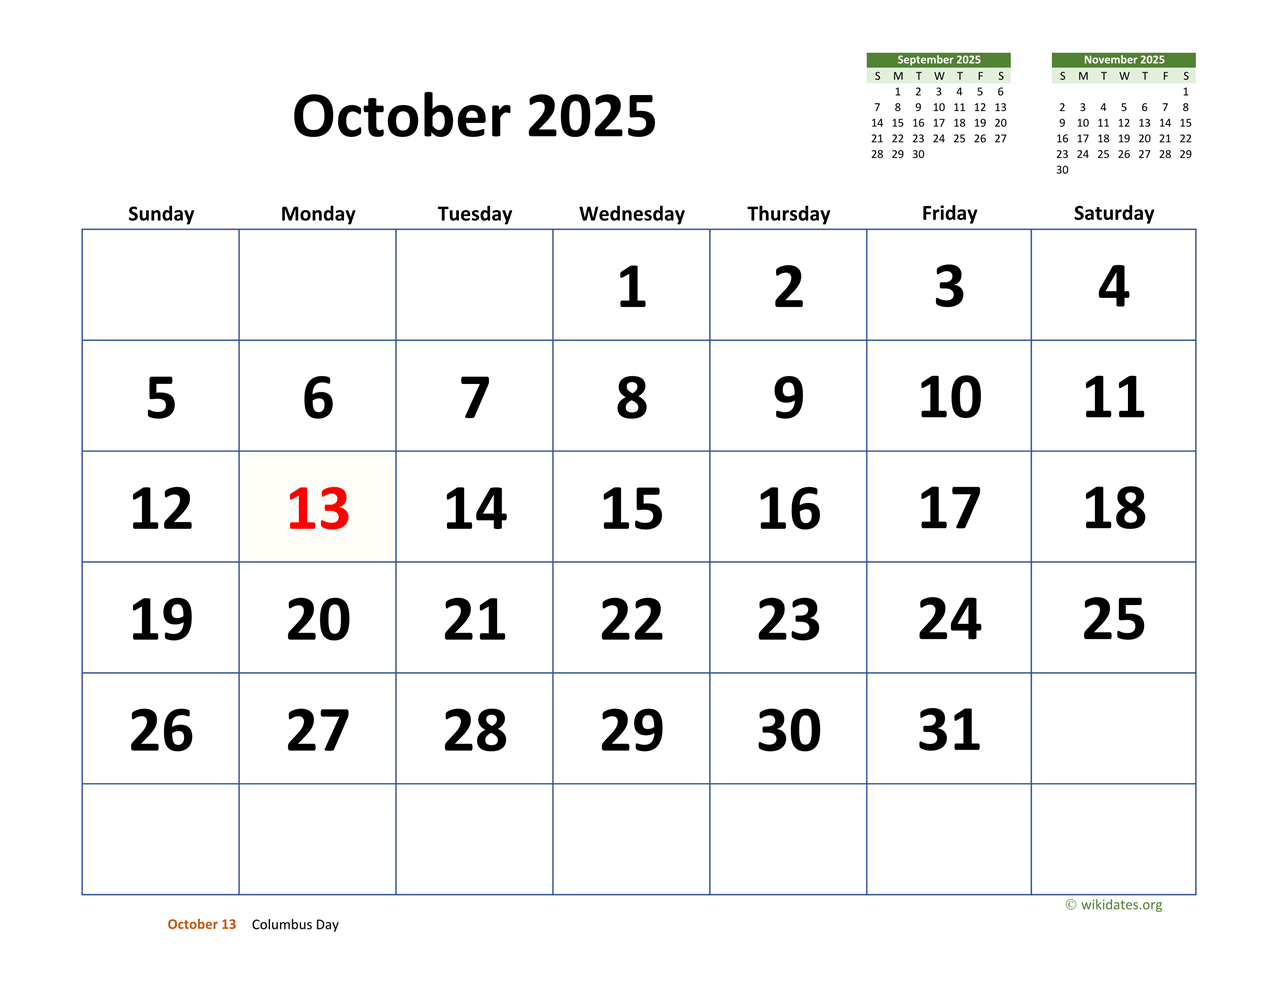 printable-jewish-calendar-2023-printable-calendar-2023